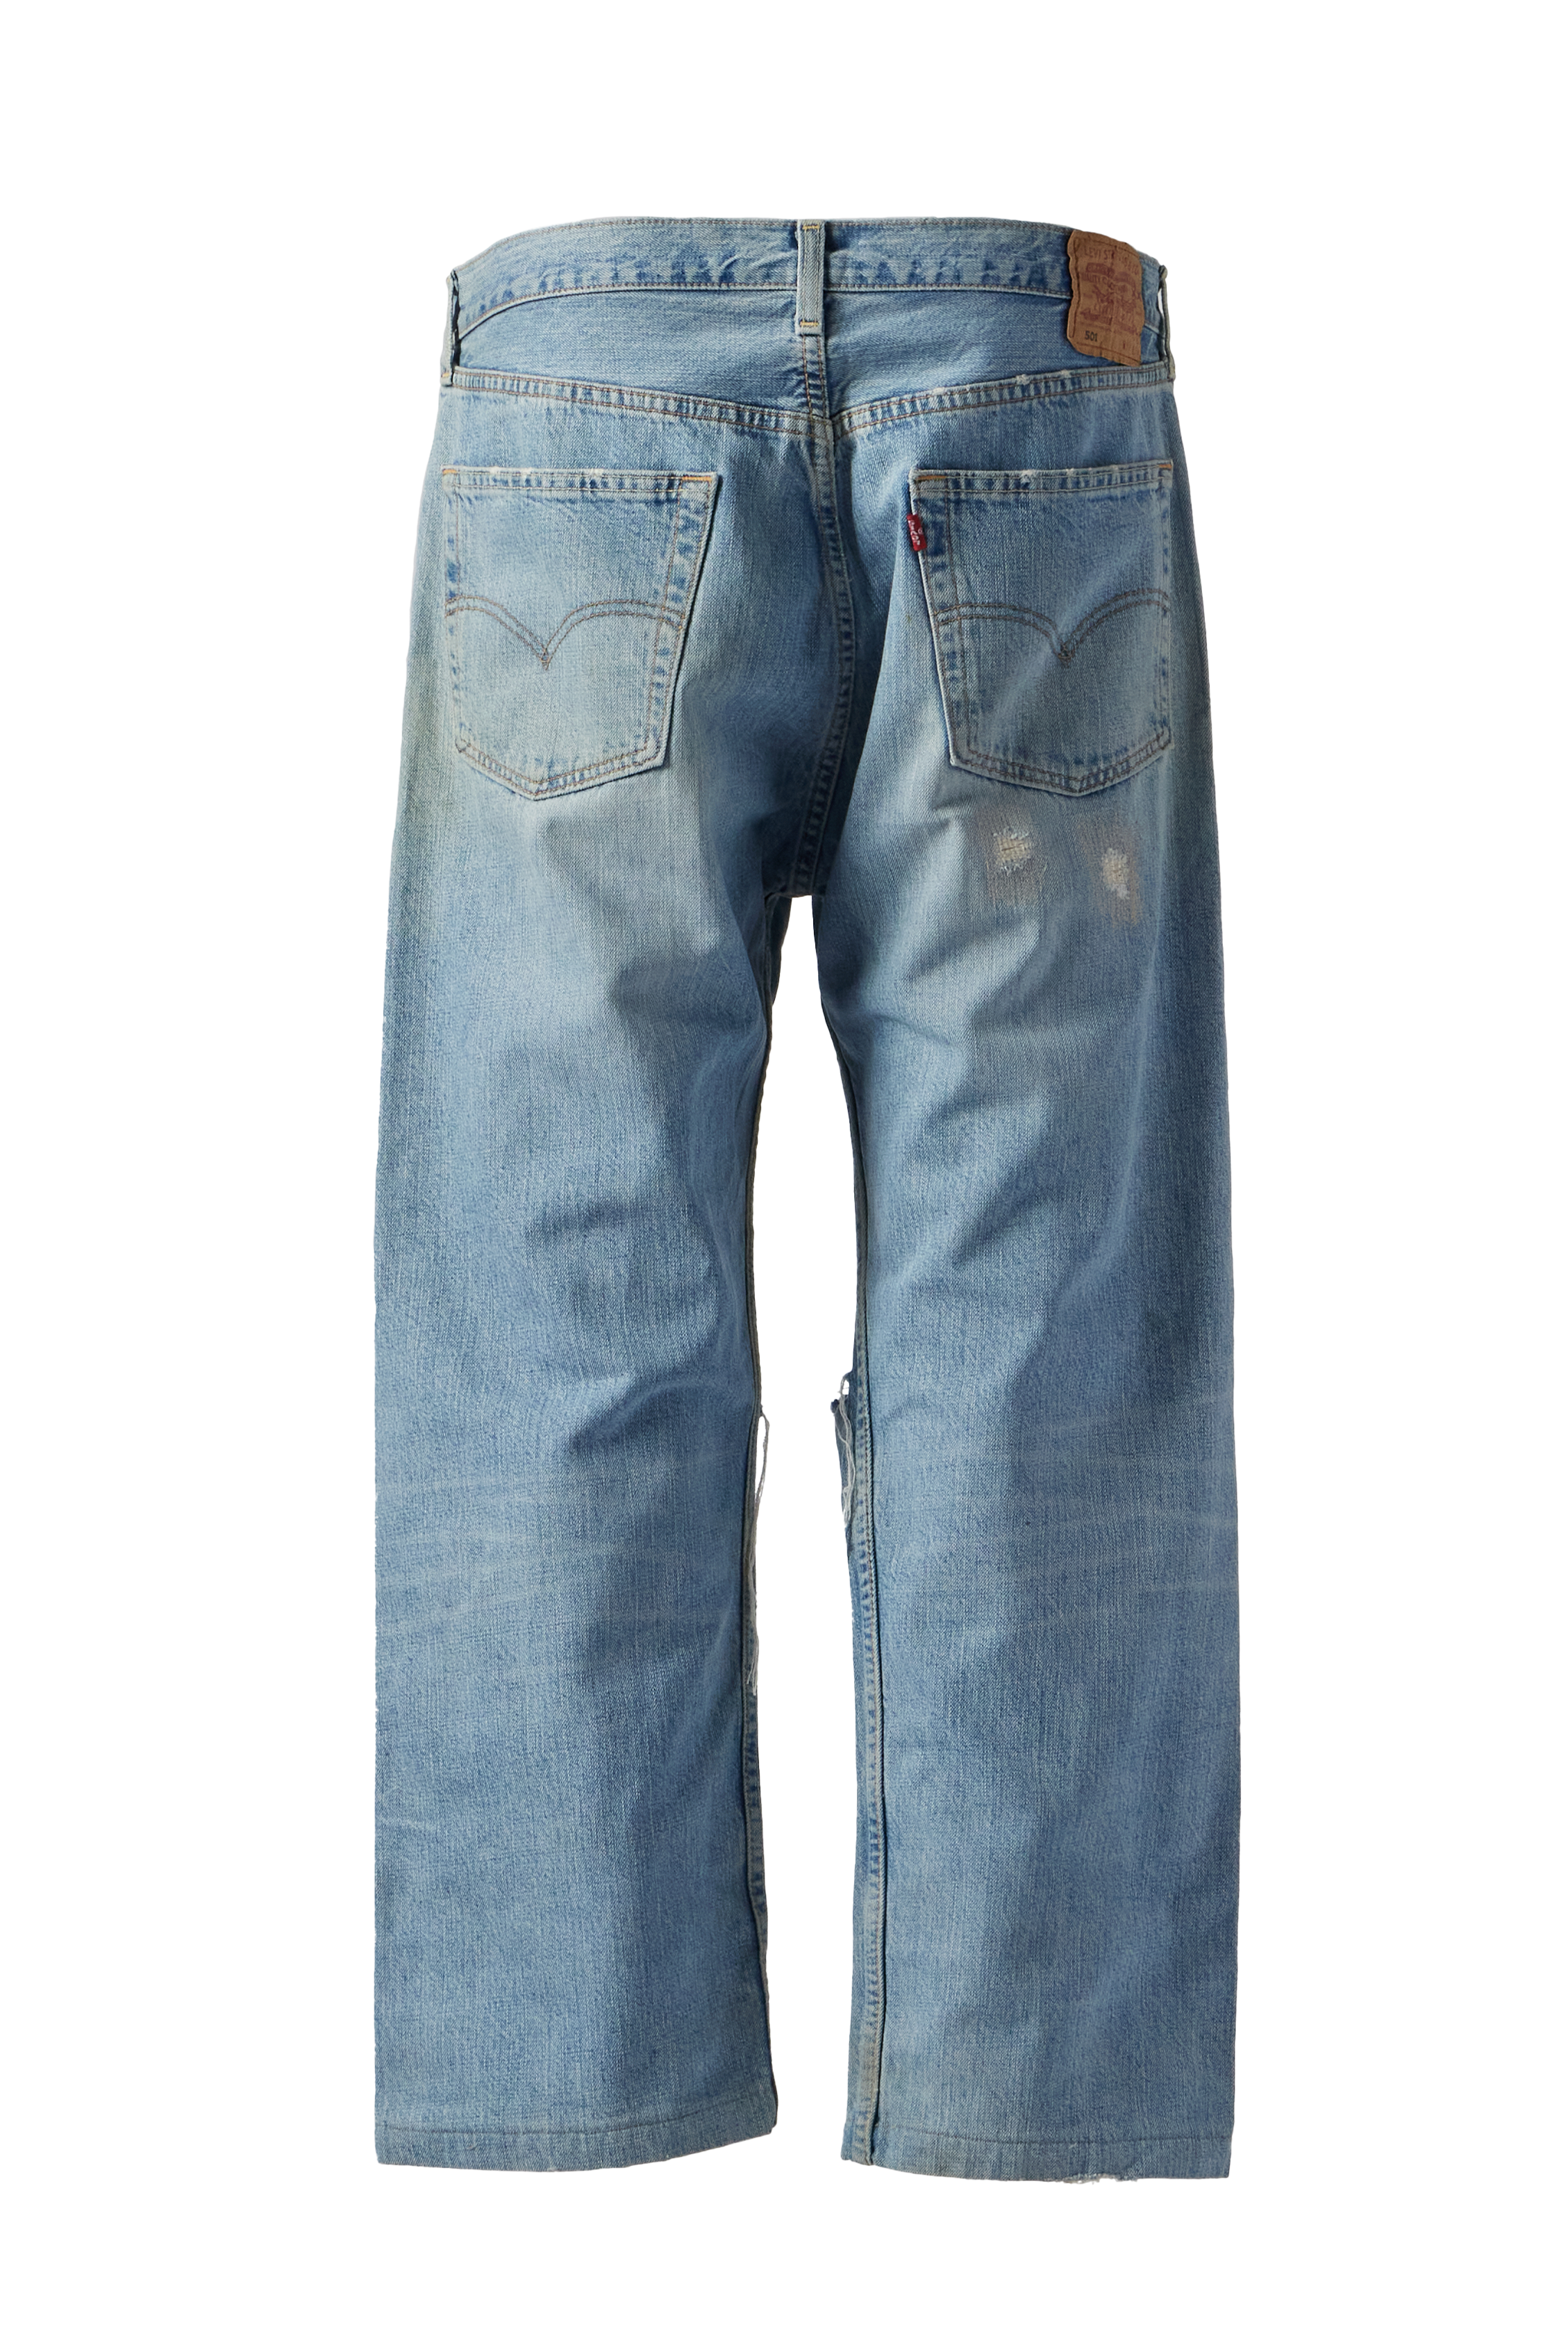 COUCOU_BEBE75018 - Heat Wave Denim Jeans product image